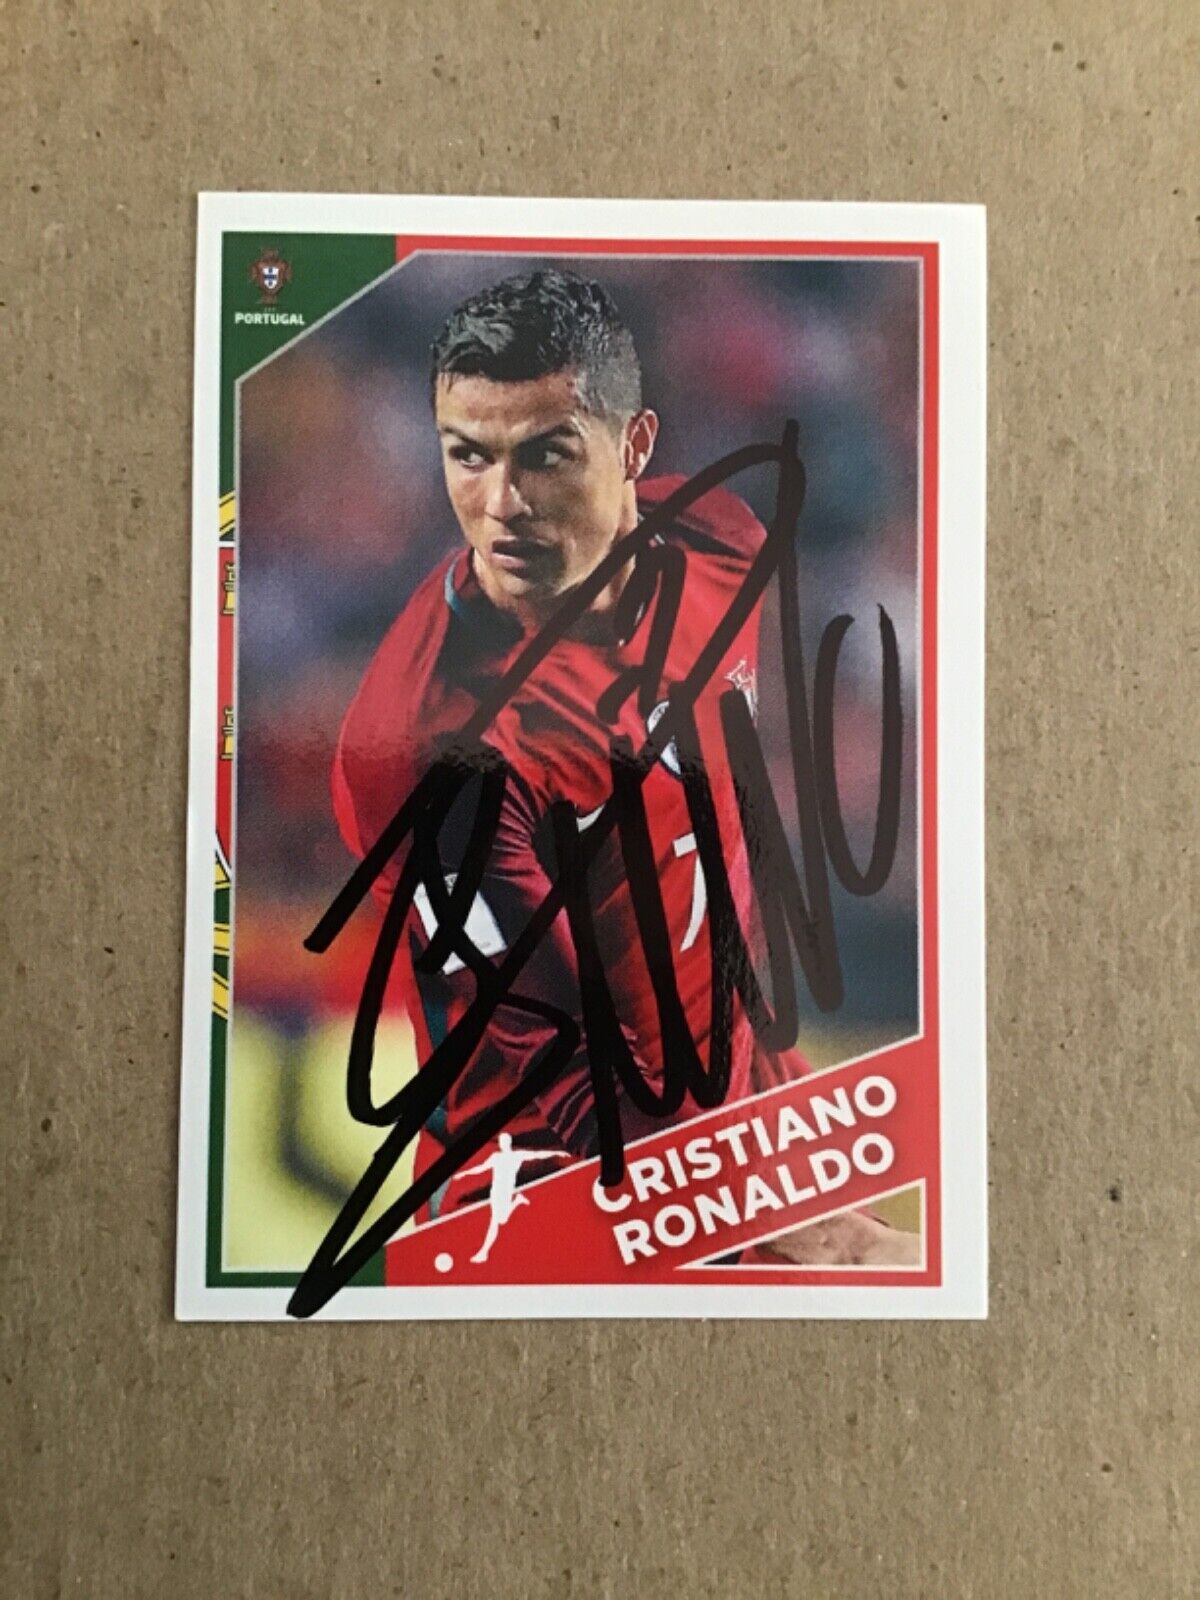 Cristiano Ronaldo, Portugal 🇵🇹 2020 Panini hand signed